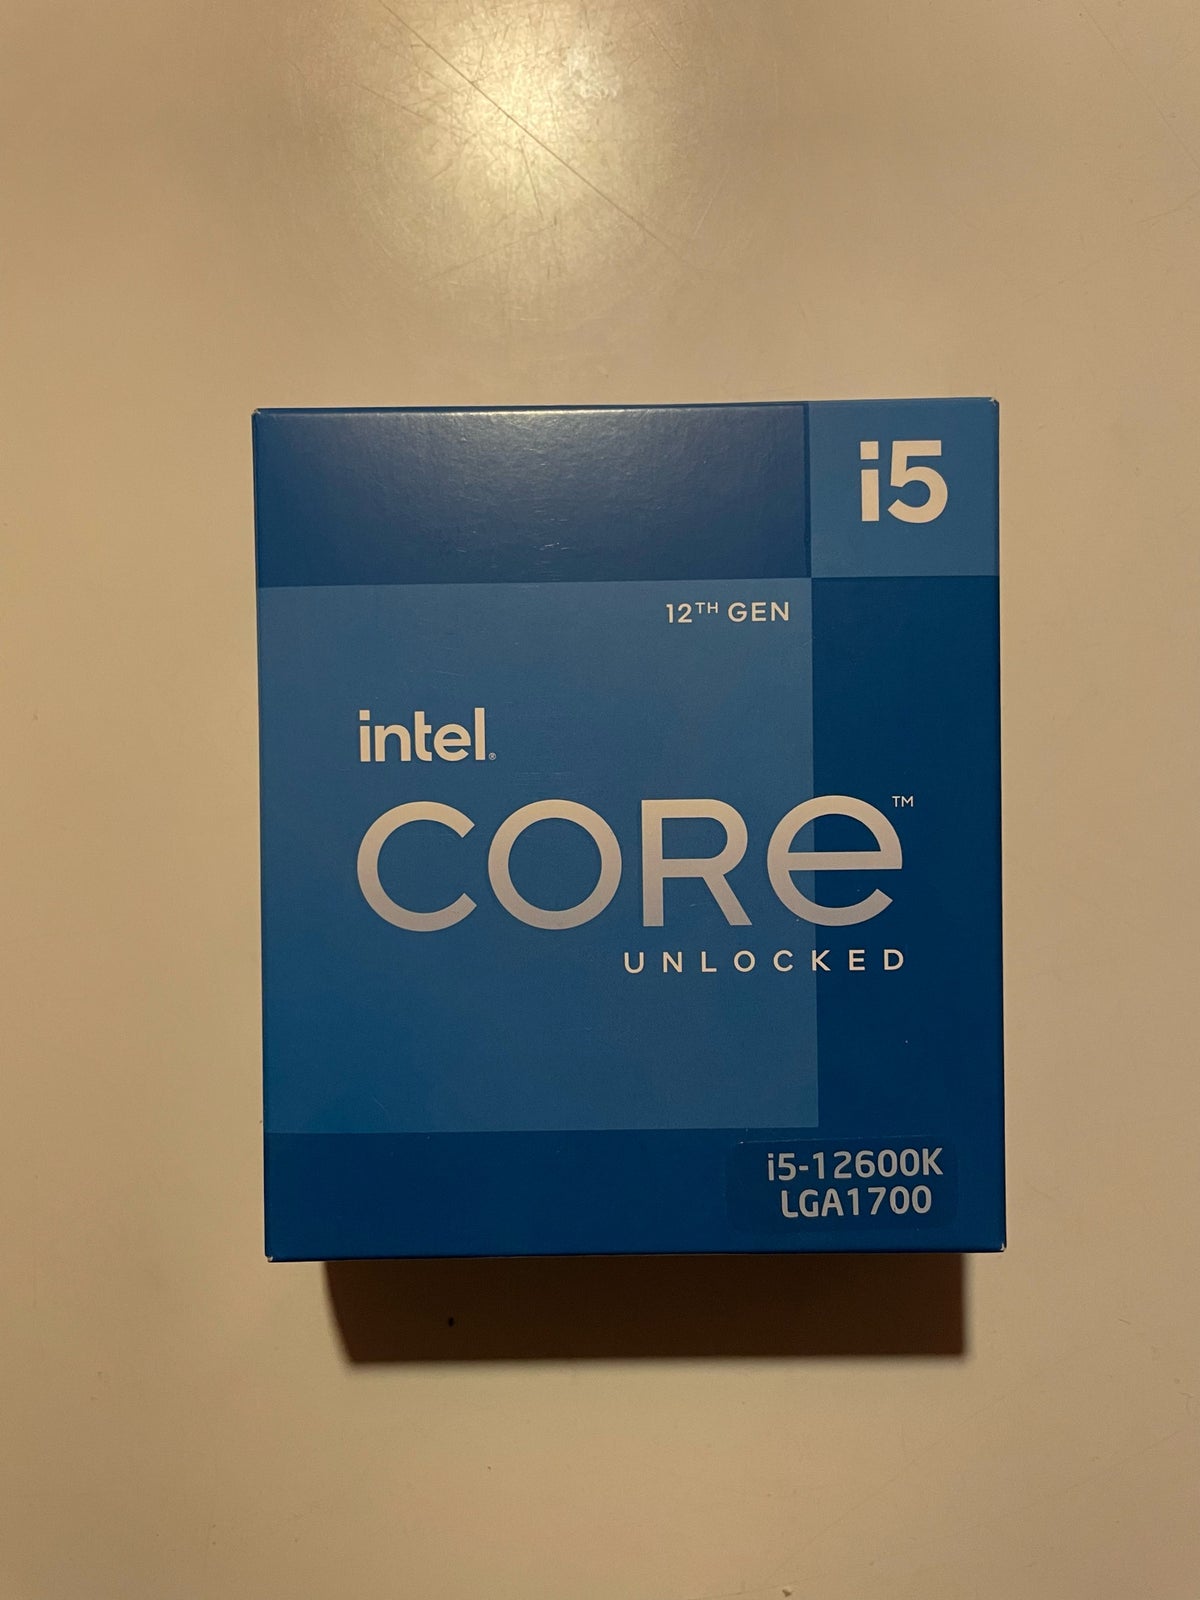 Intel, Gaming Computer, Intel Core i5 12600k Ghz